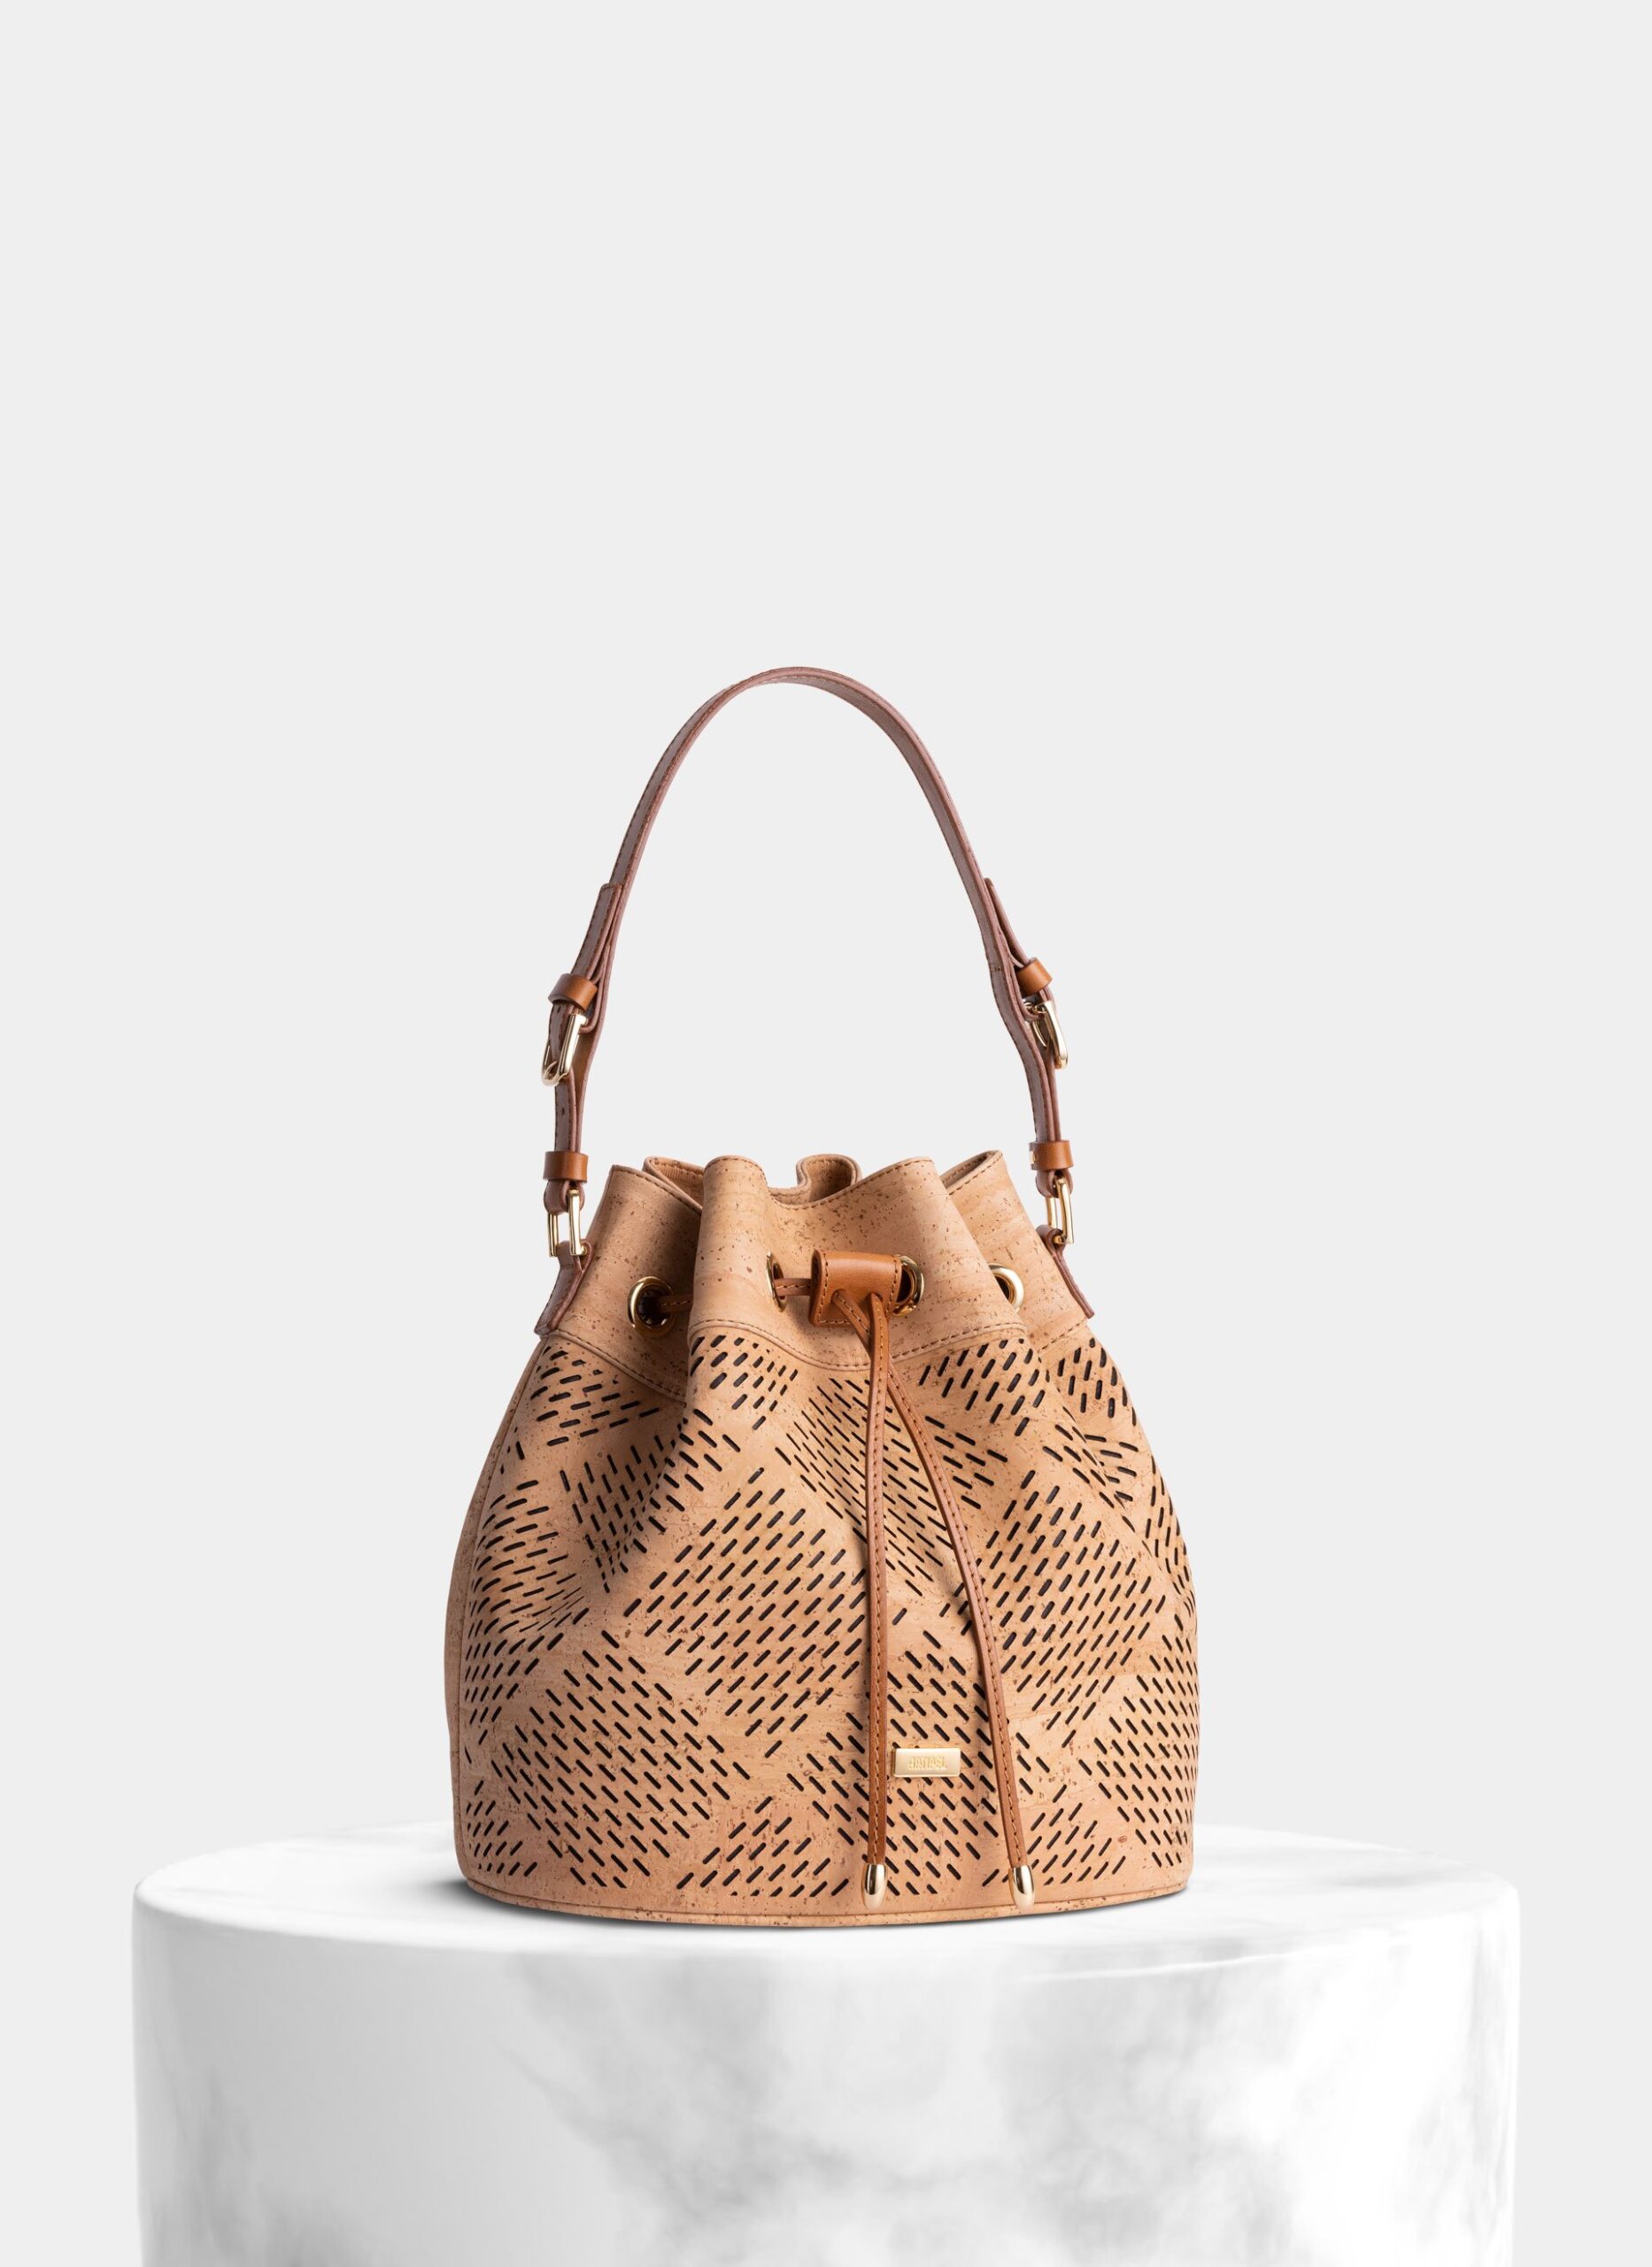 Natural Cork Bucket Bag Texture Detail - Shop now at StudioCork